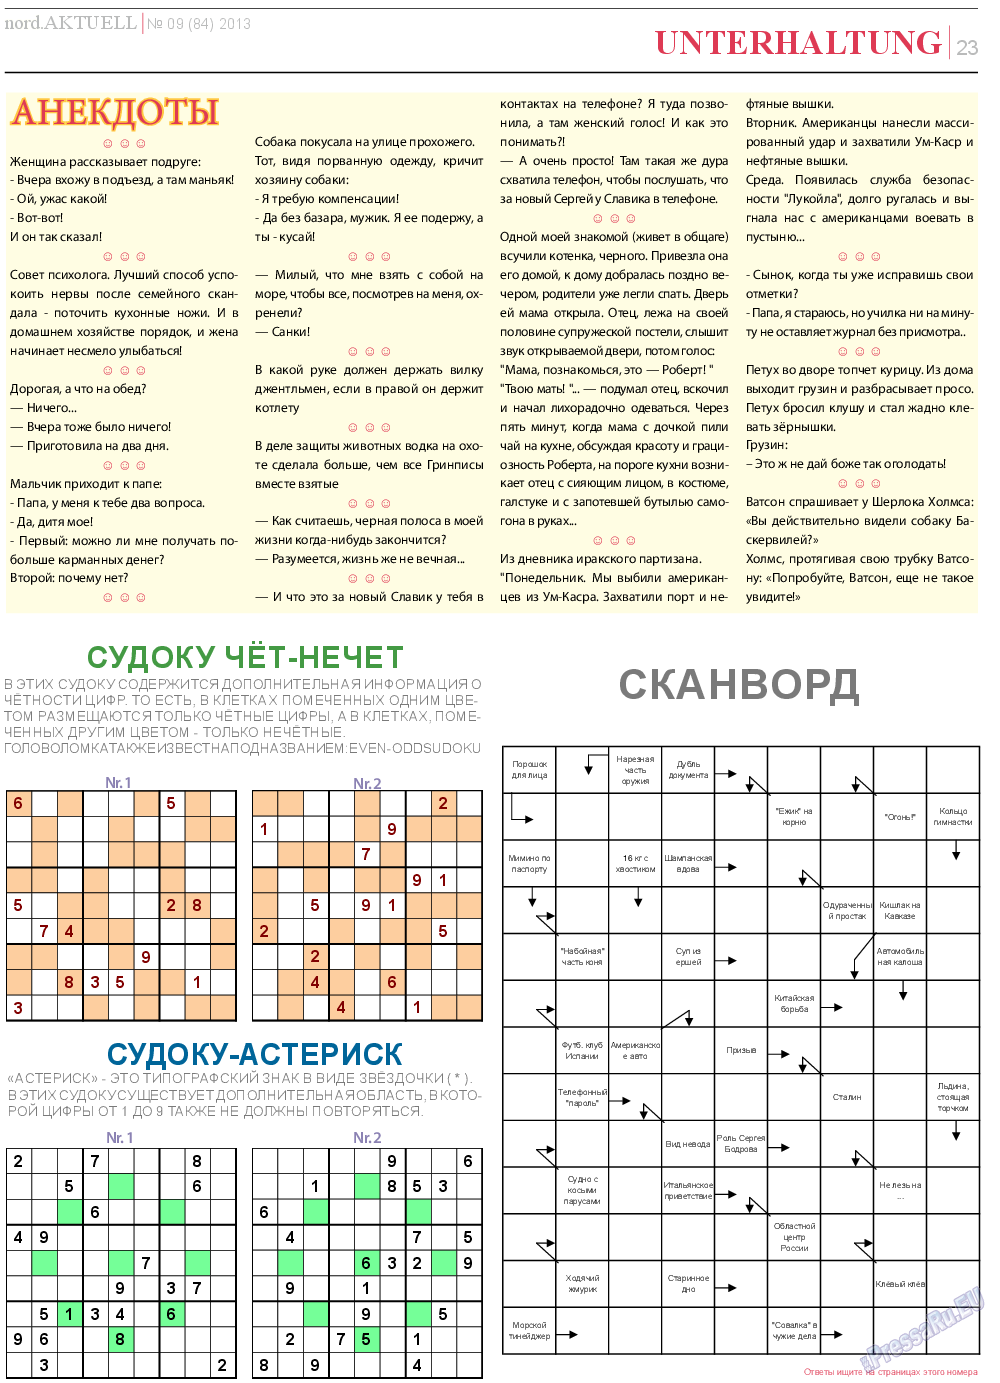 nord.Aktuell, газета. 2013 №9 стр.23